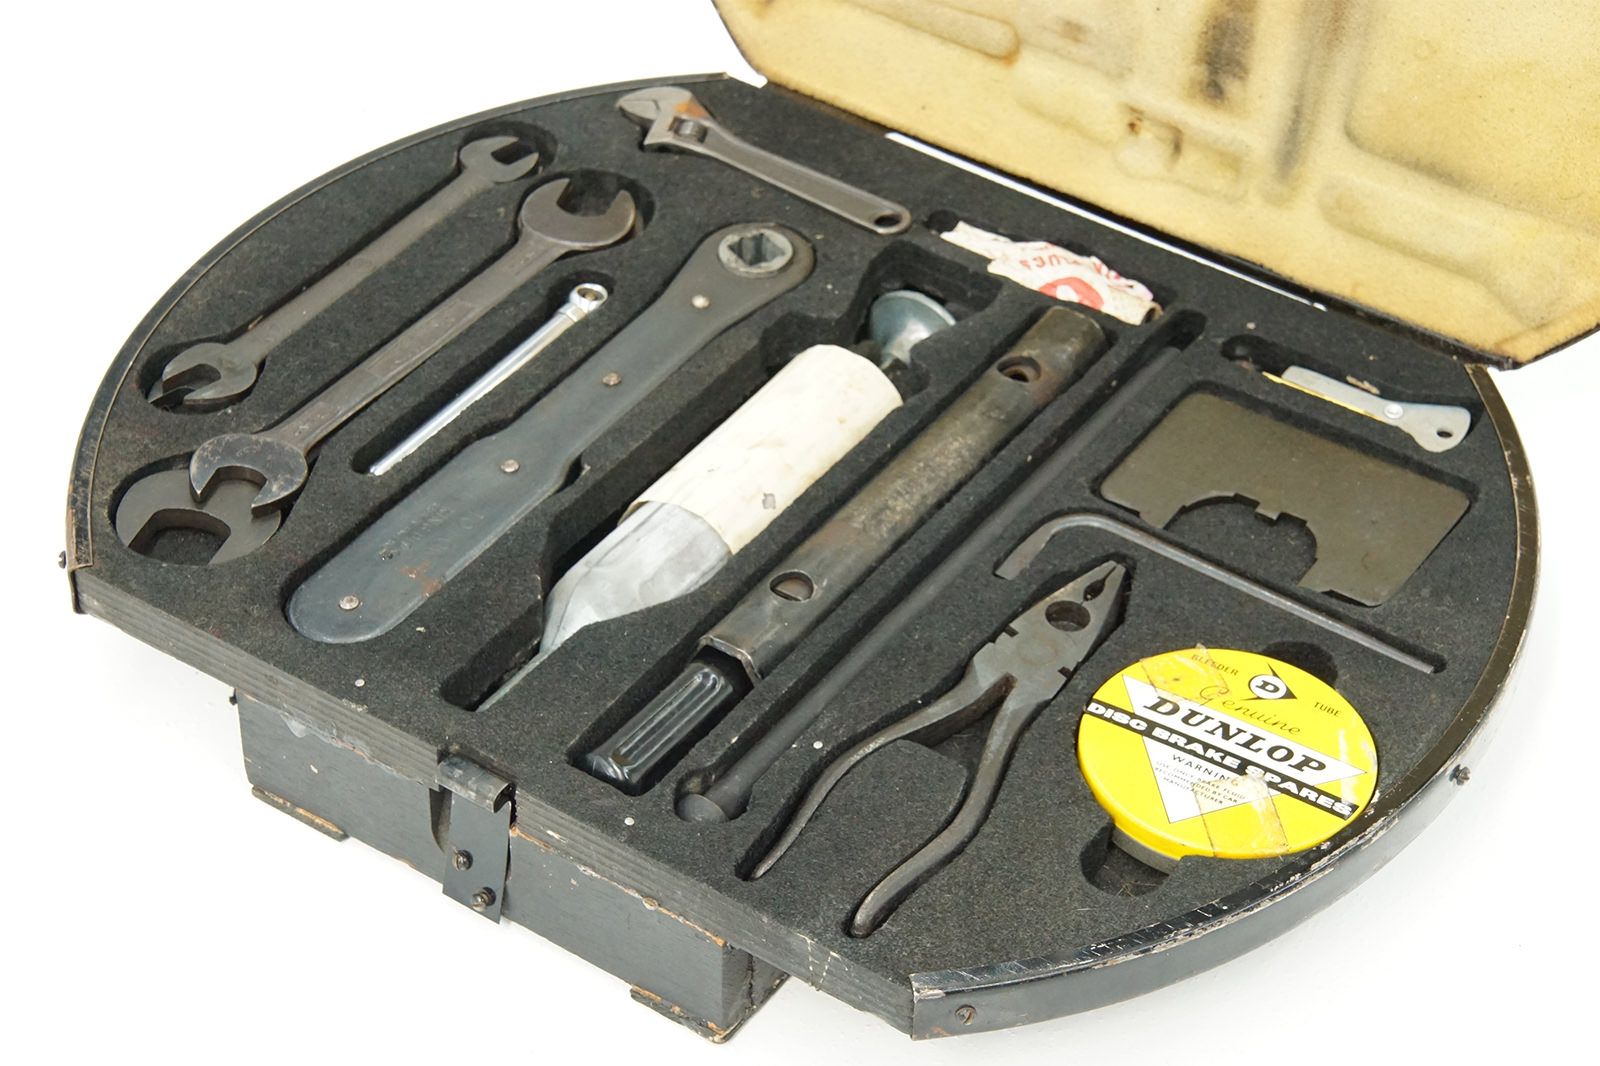 tool-kit-jaguar-mk2-in-wheel-complete-tool-kit-from-the-ian-cummins-collection1.jpg